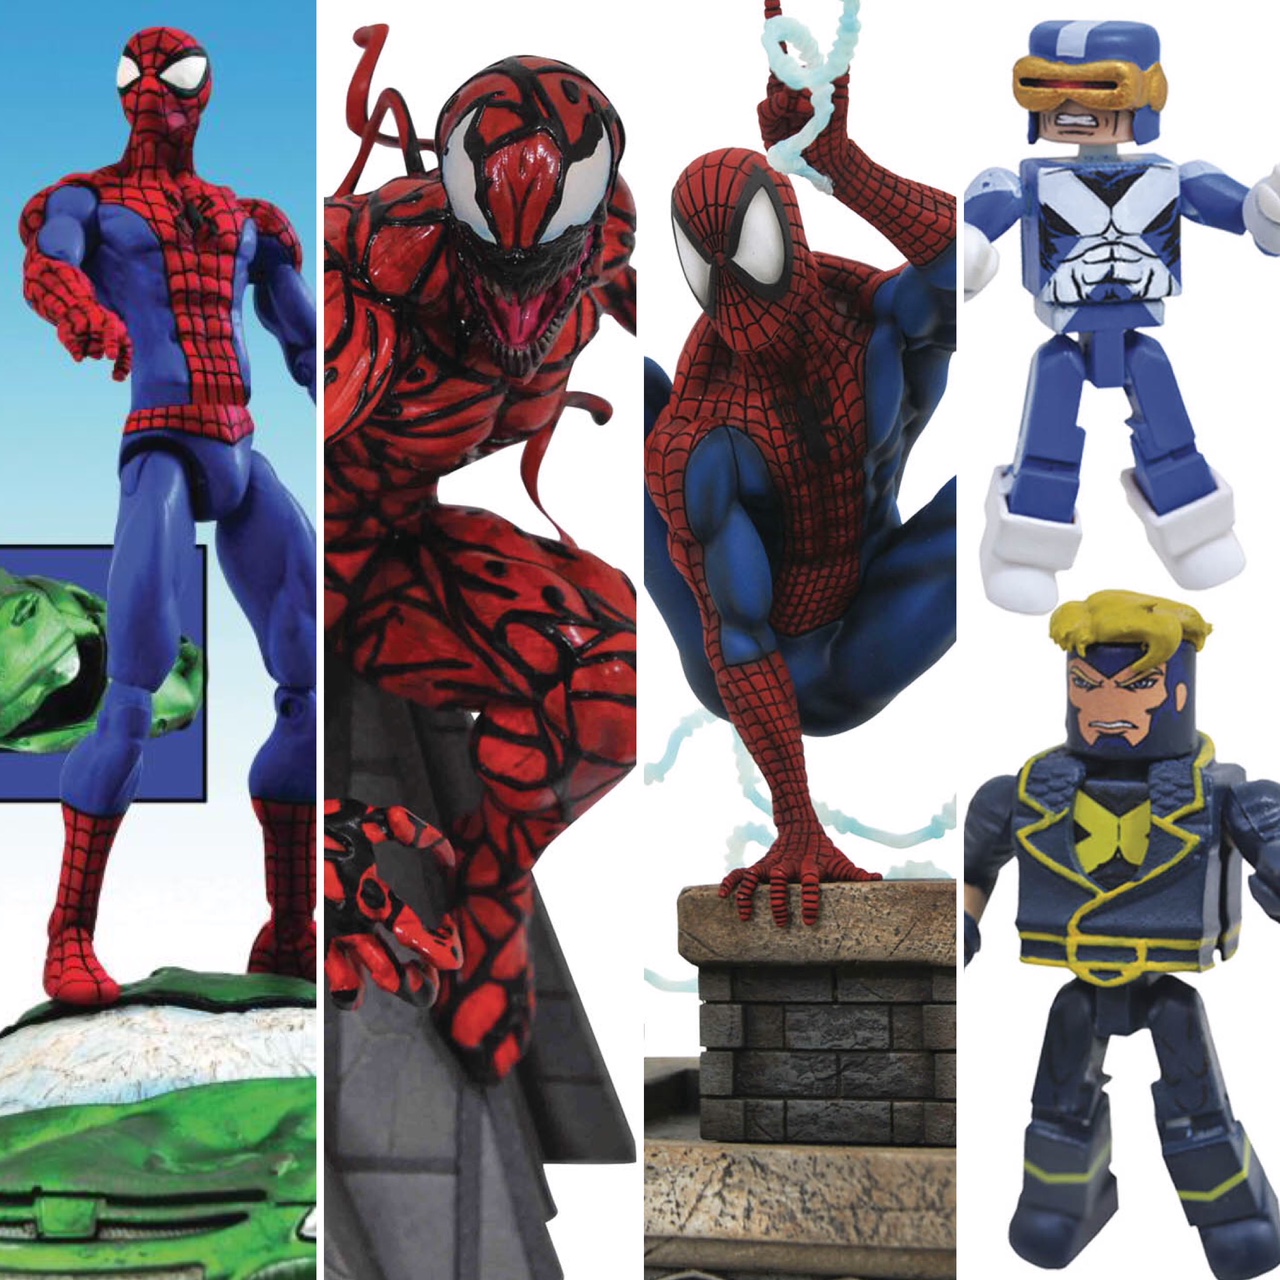 Spiderman (webbing) Statue Diamond Select Gallery